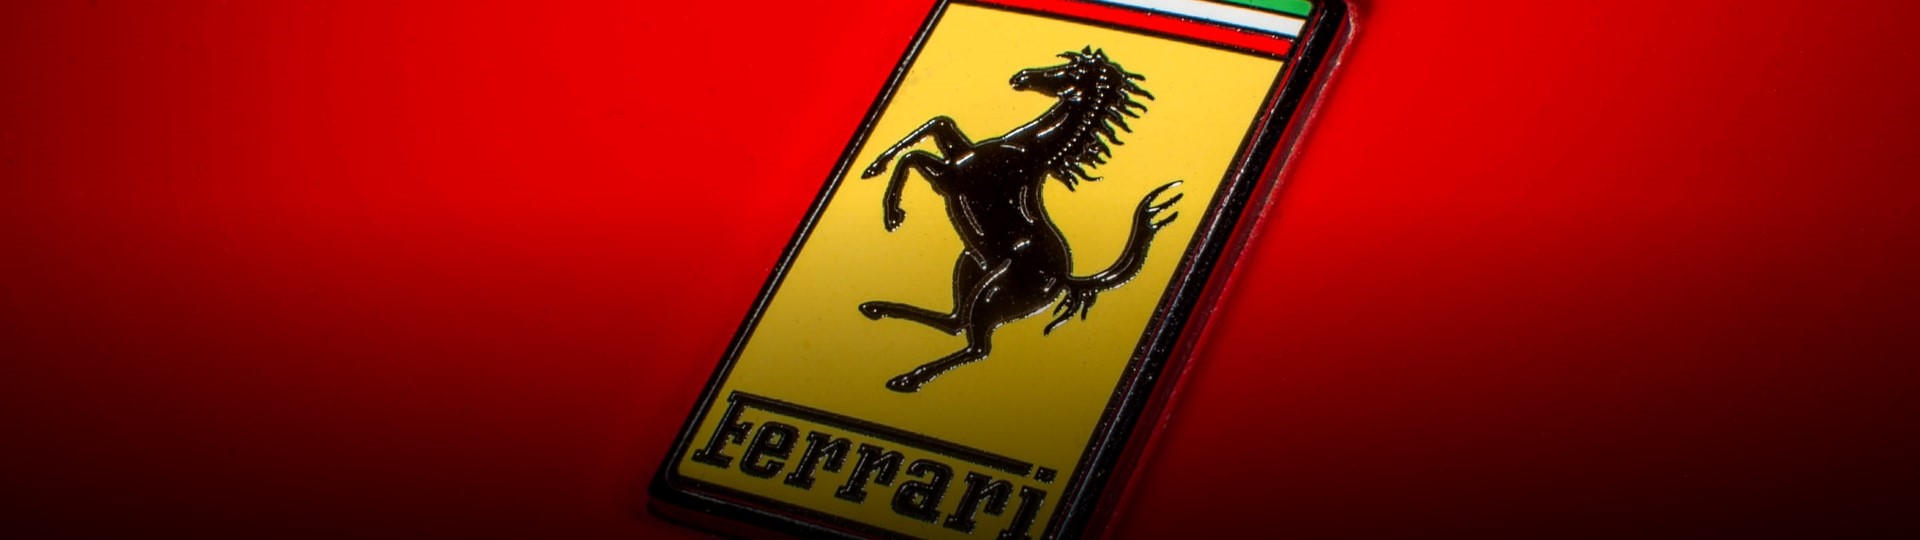 Ferrari má nového šéfa, přechod k elektrickému pohonu povede Benedetto Vigna